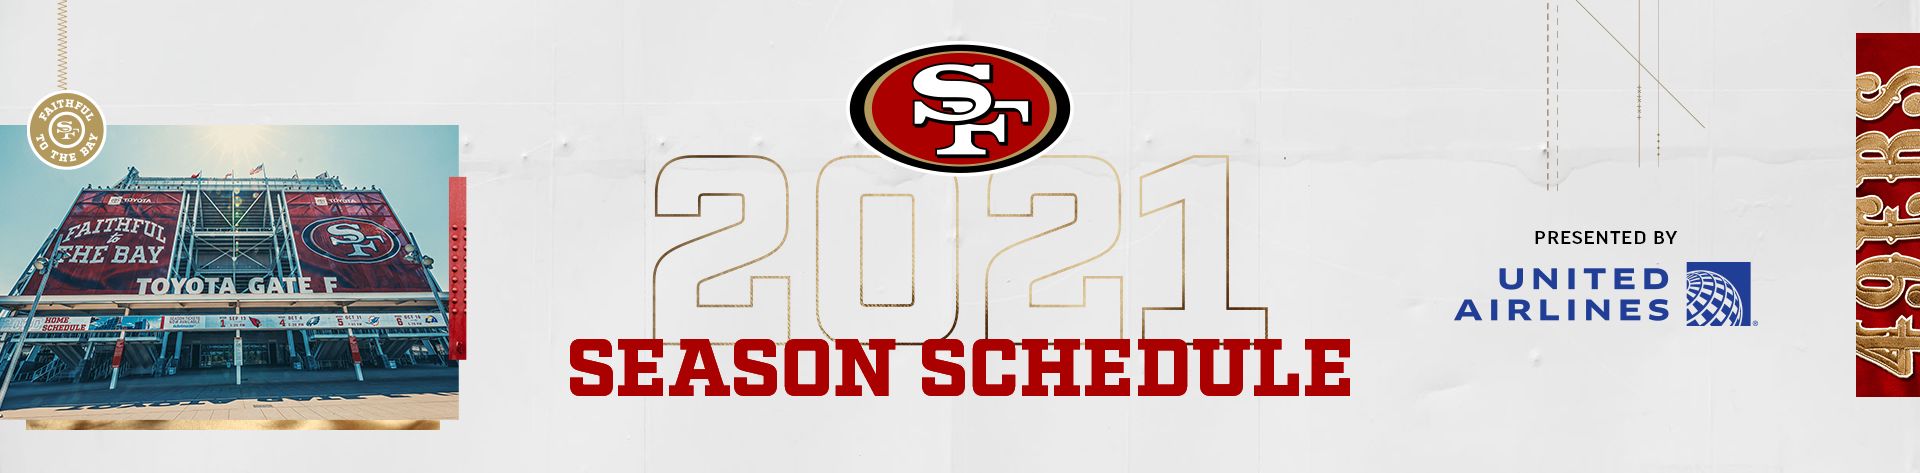 49ers Schedule | San Francisco 49ers - 49ers.com